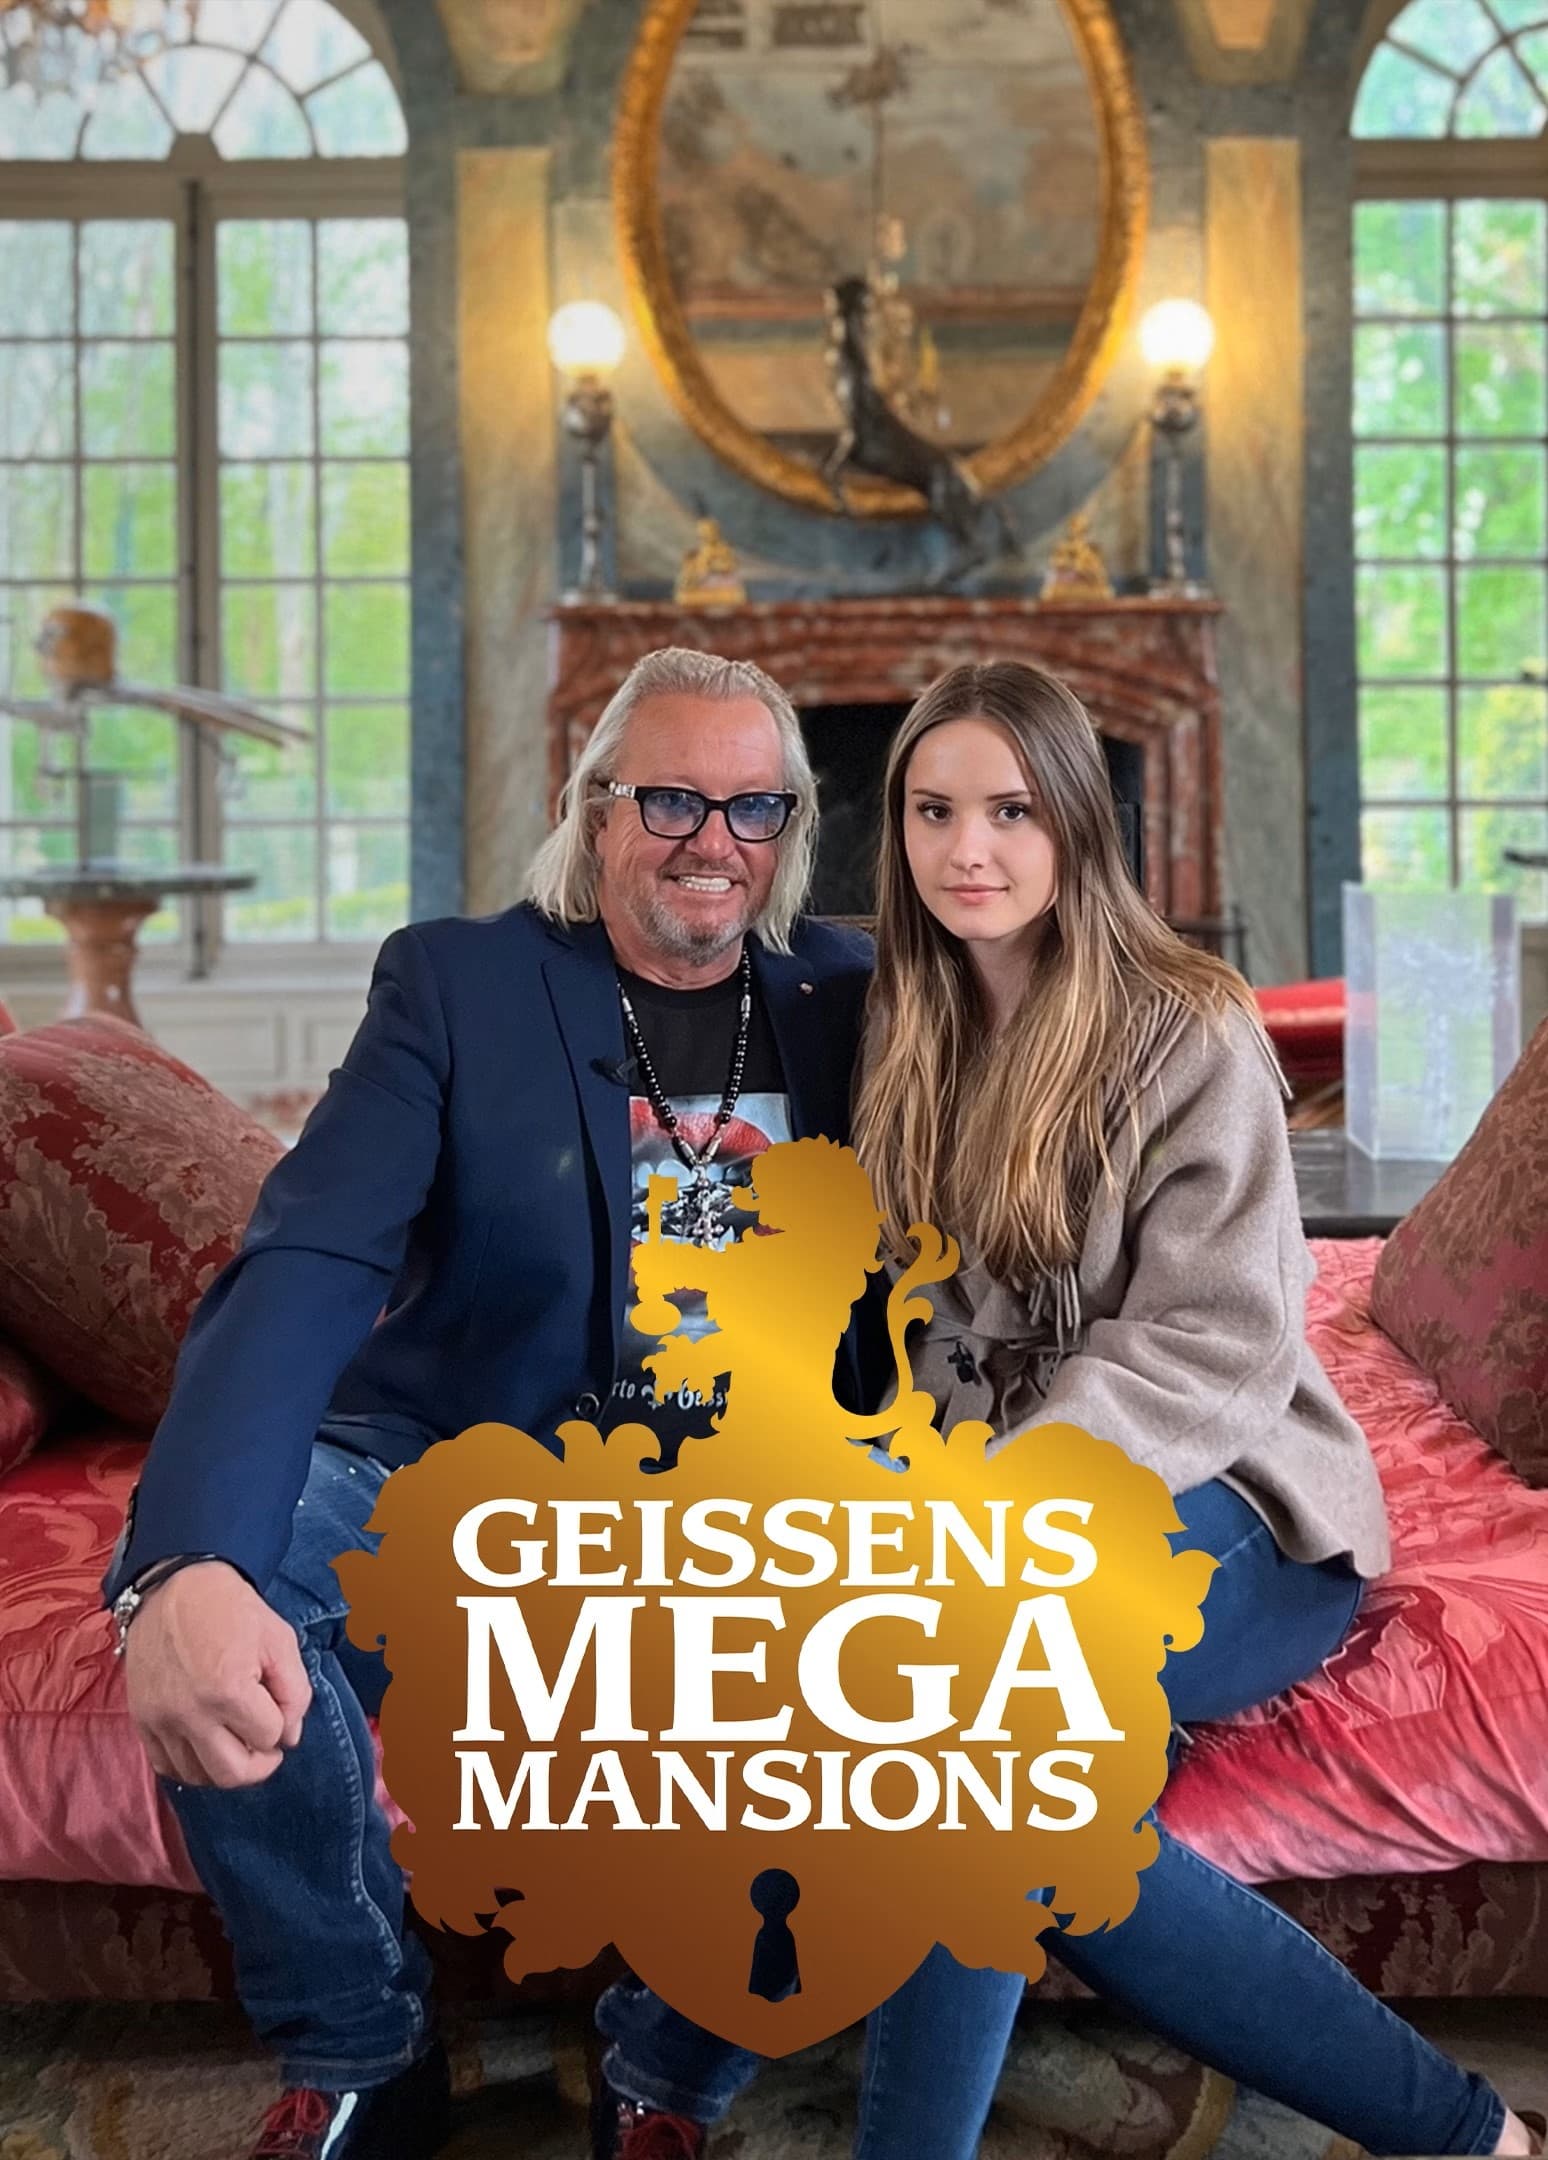 Geissens' Mega Mansions